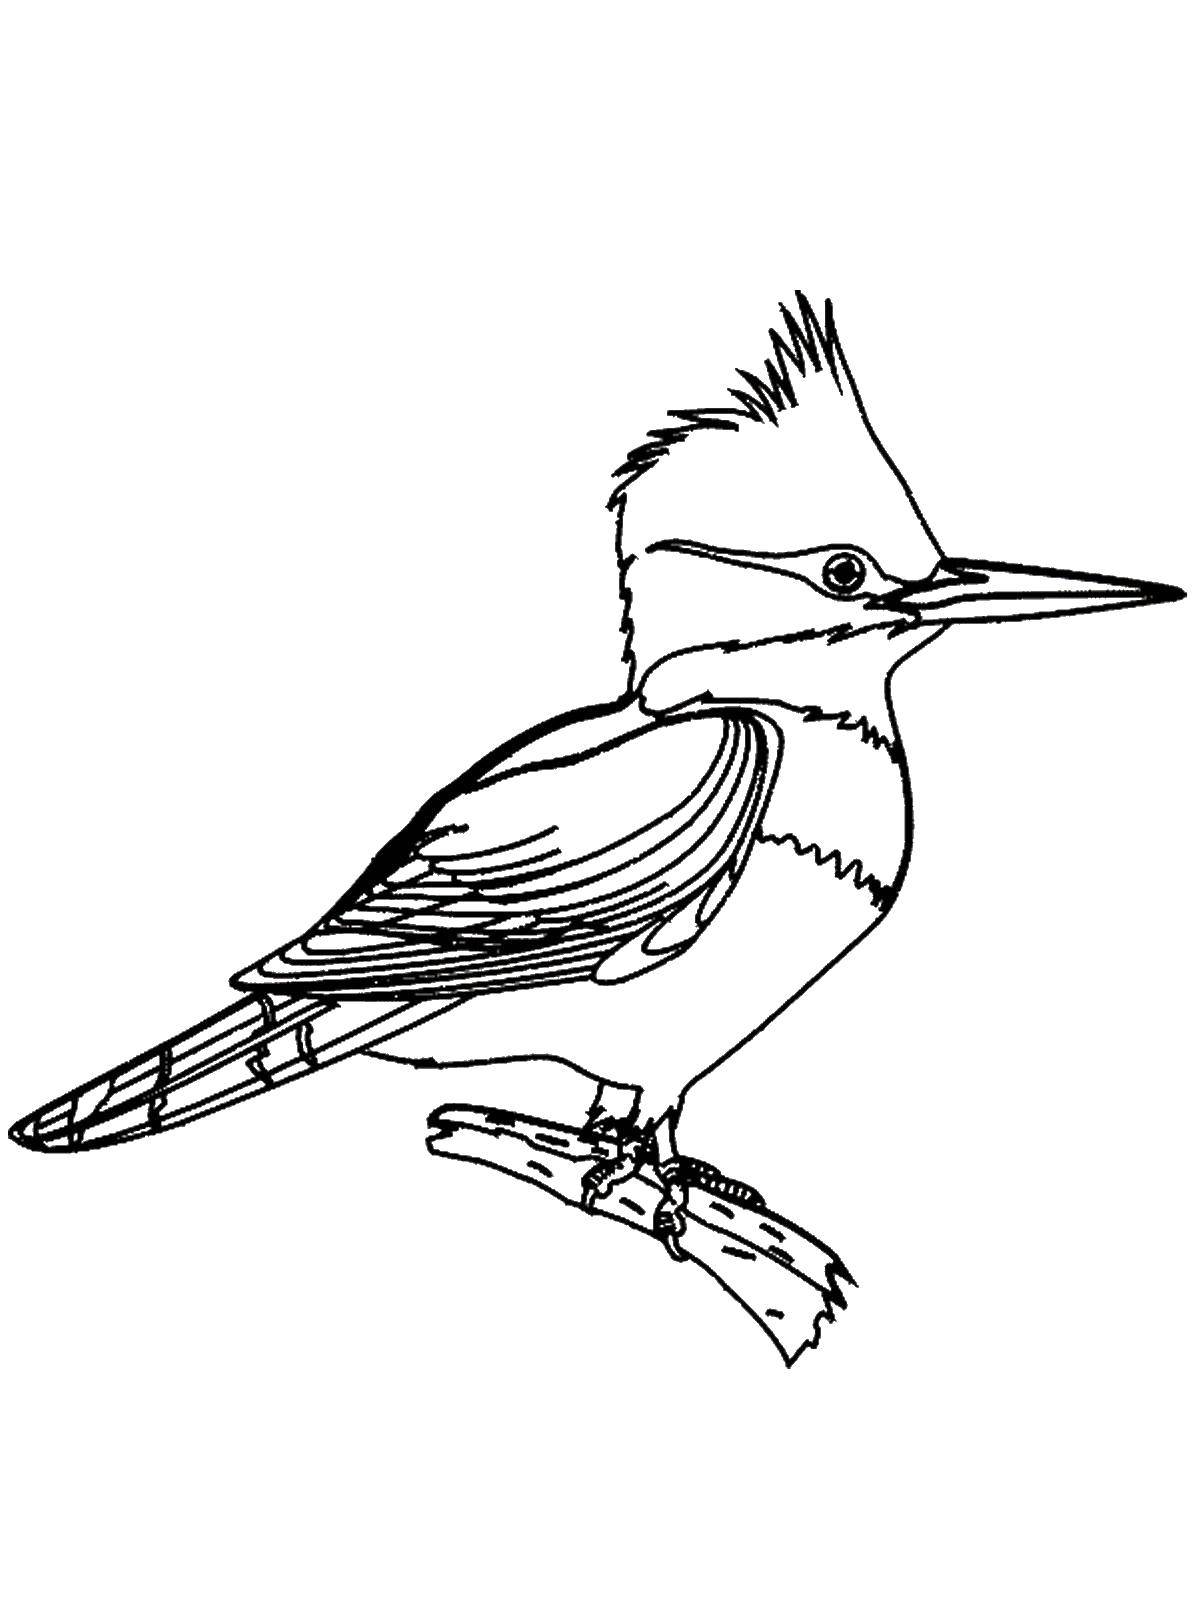 Coloring Woodpecker. Category birds. Tags:  woodpecker .